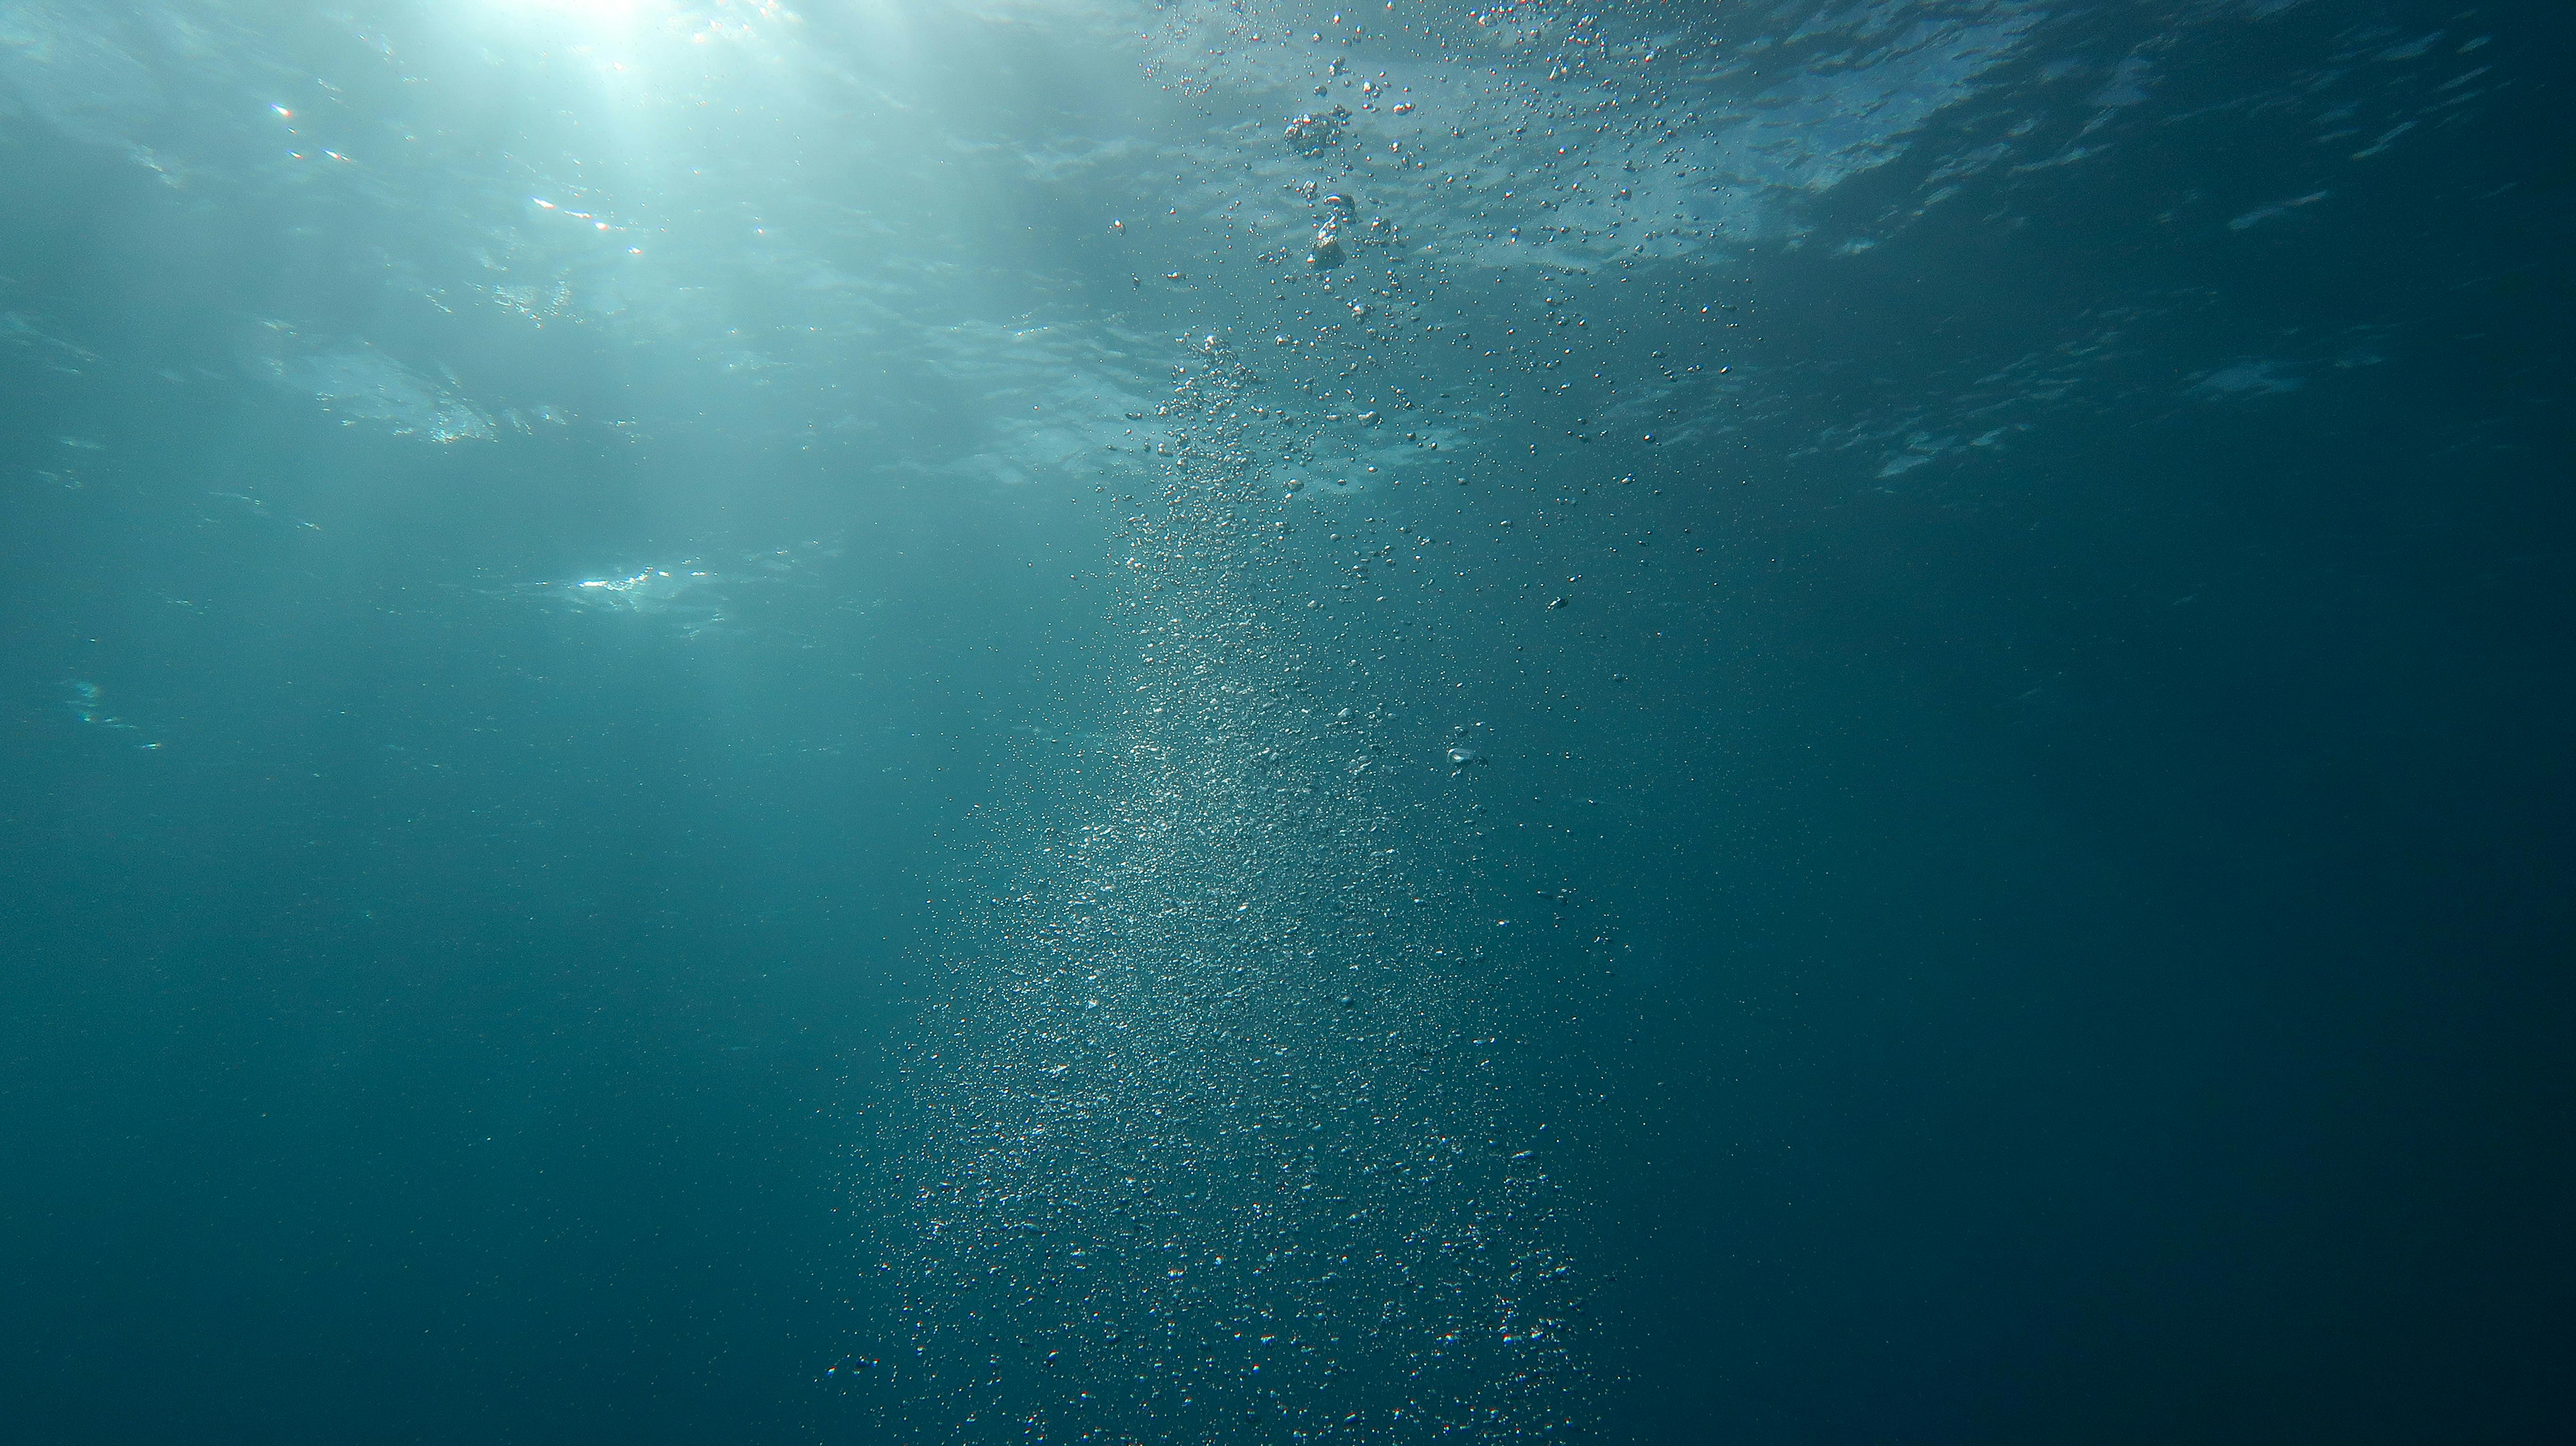 Underwater Photos, Download The BEST Free Underwater Stock Photos